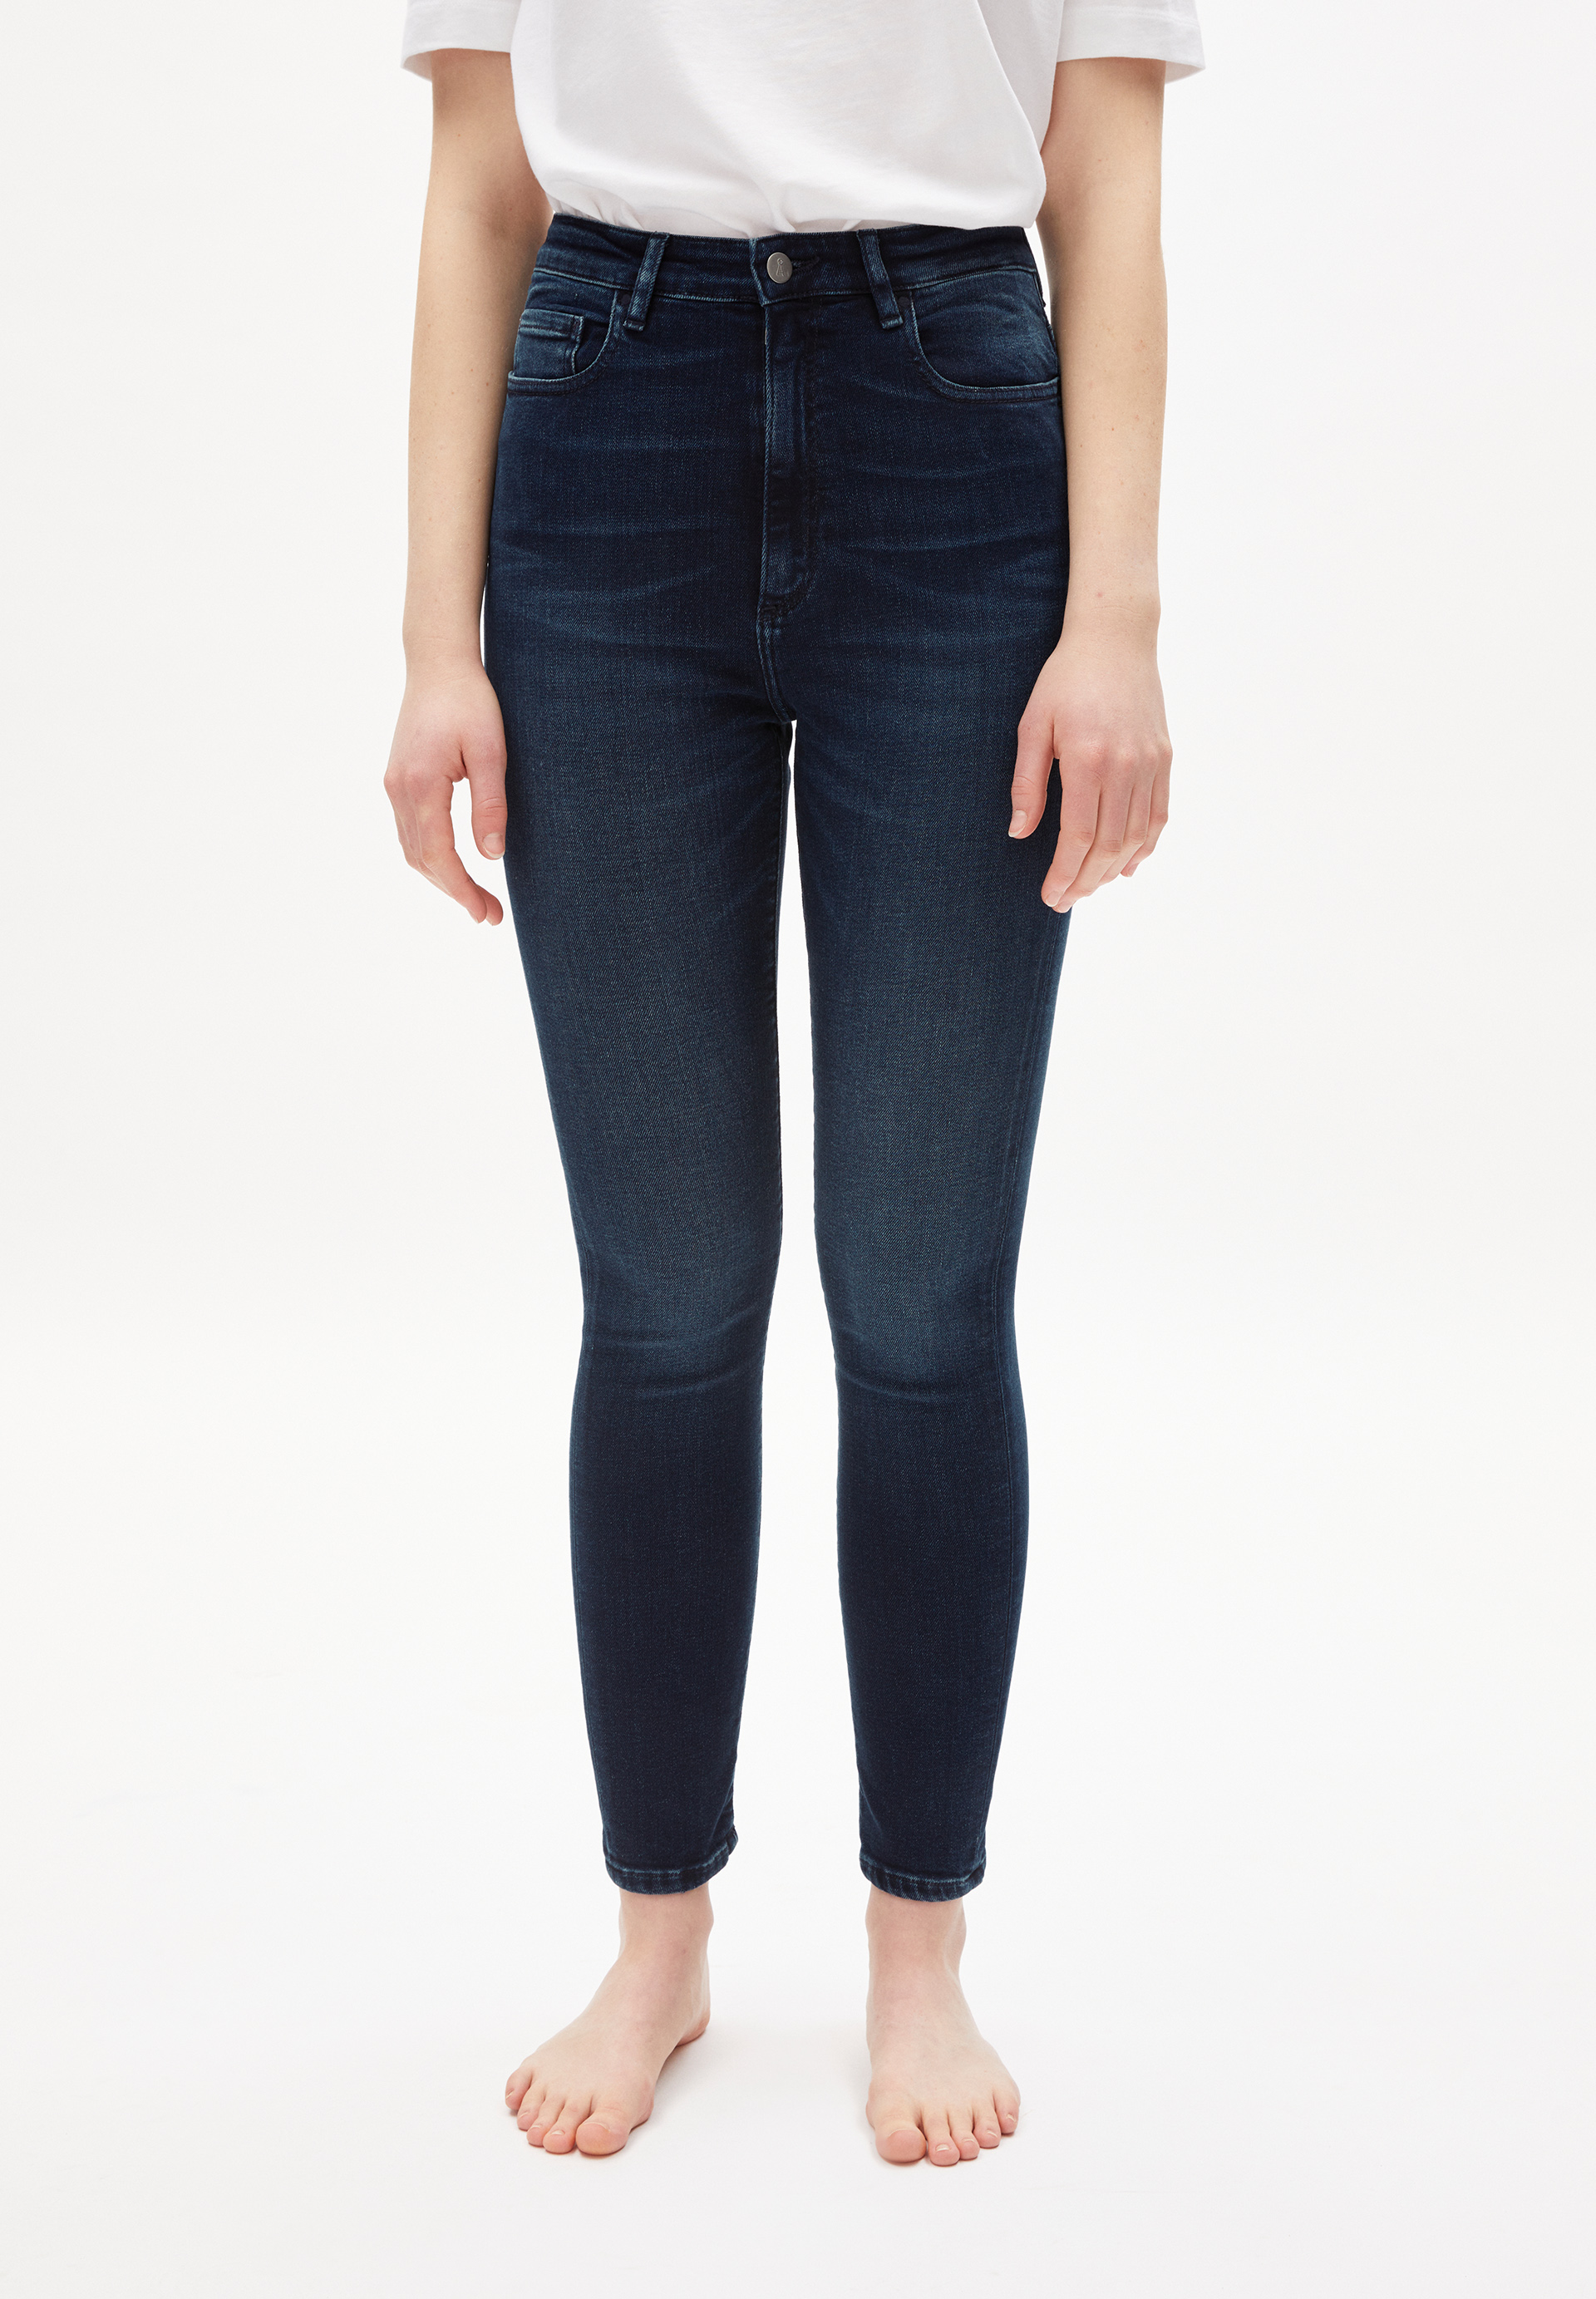 Skinny Fit Jeans INGAA X STRETCH neptune blue